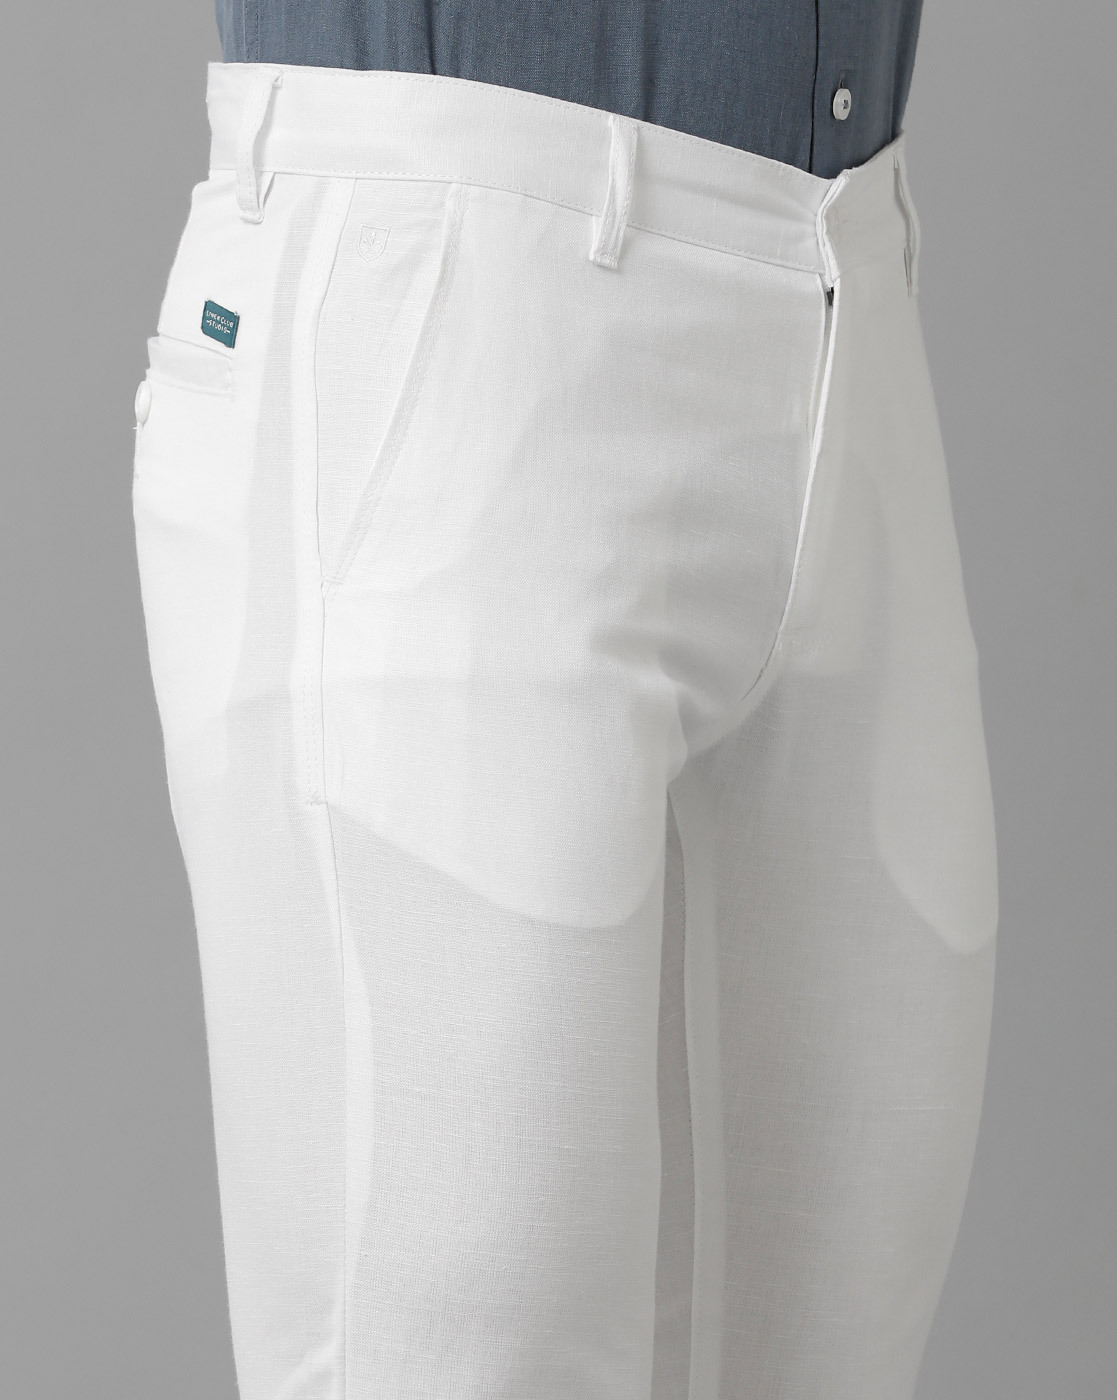 Womens Golf pants  Forrest Golf Australian made designer golf clothing